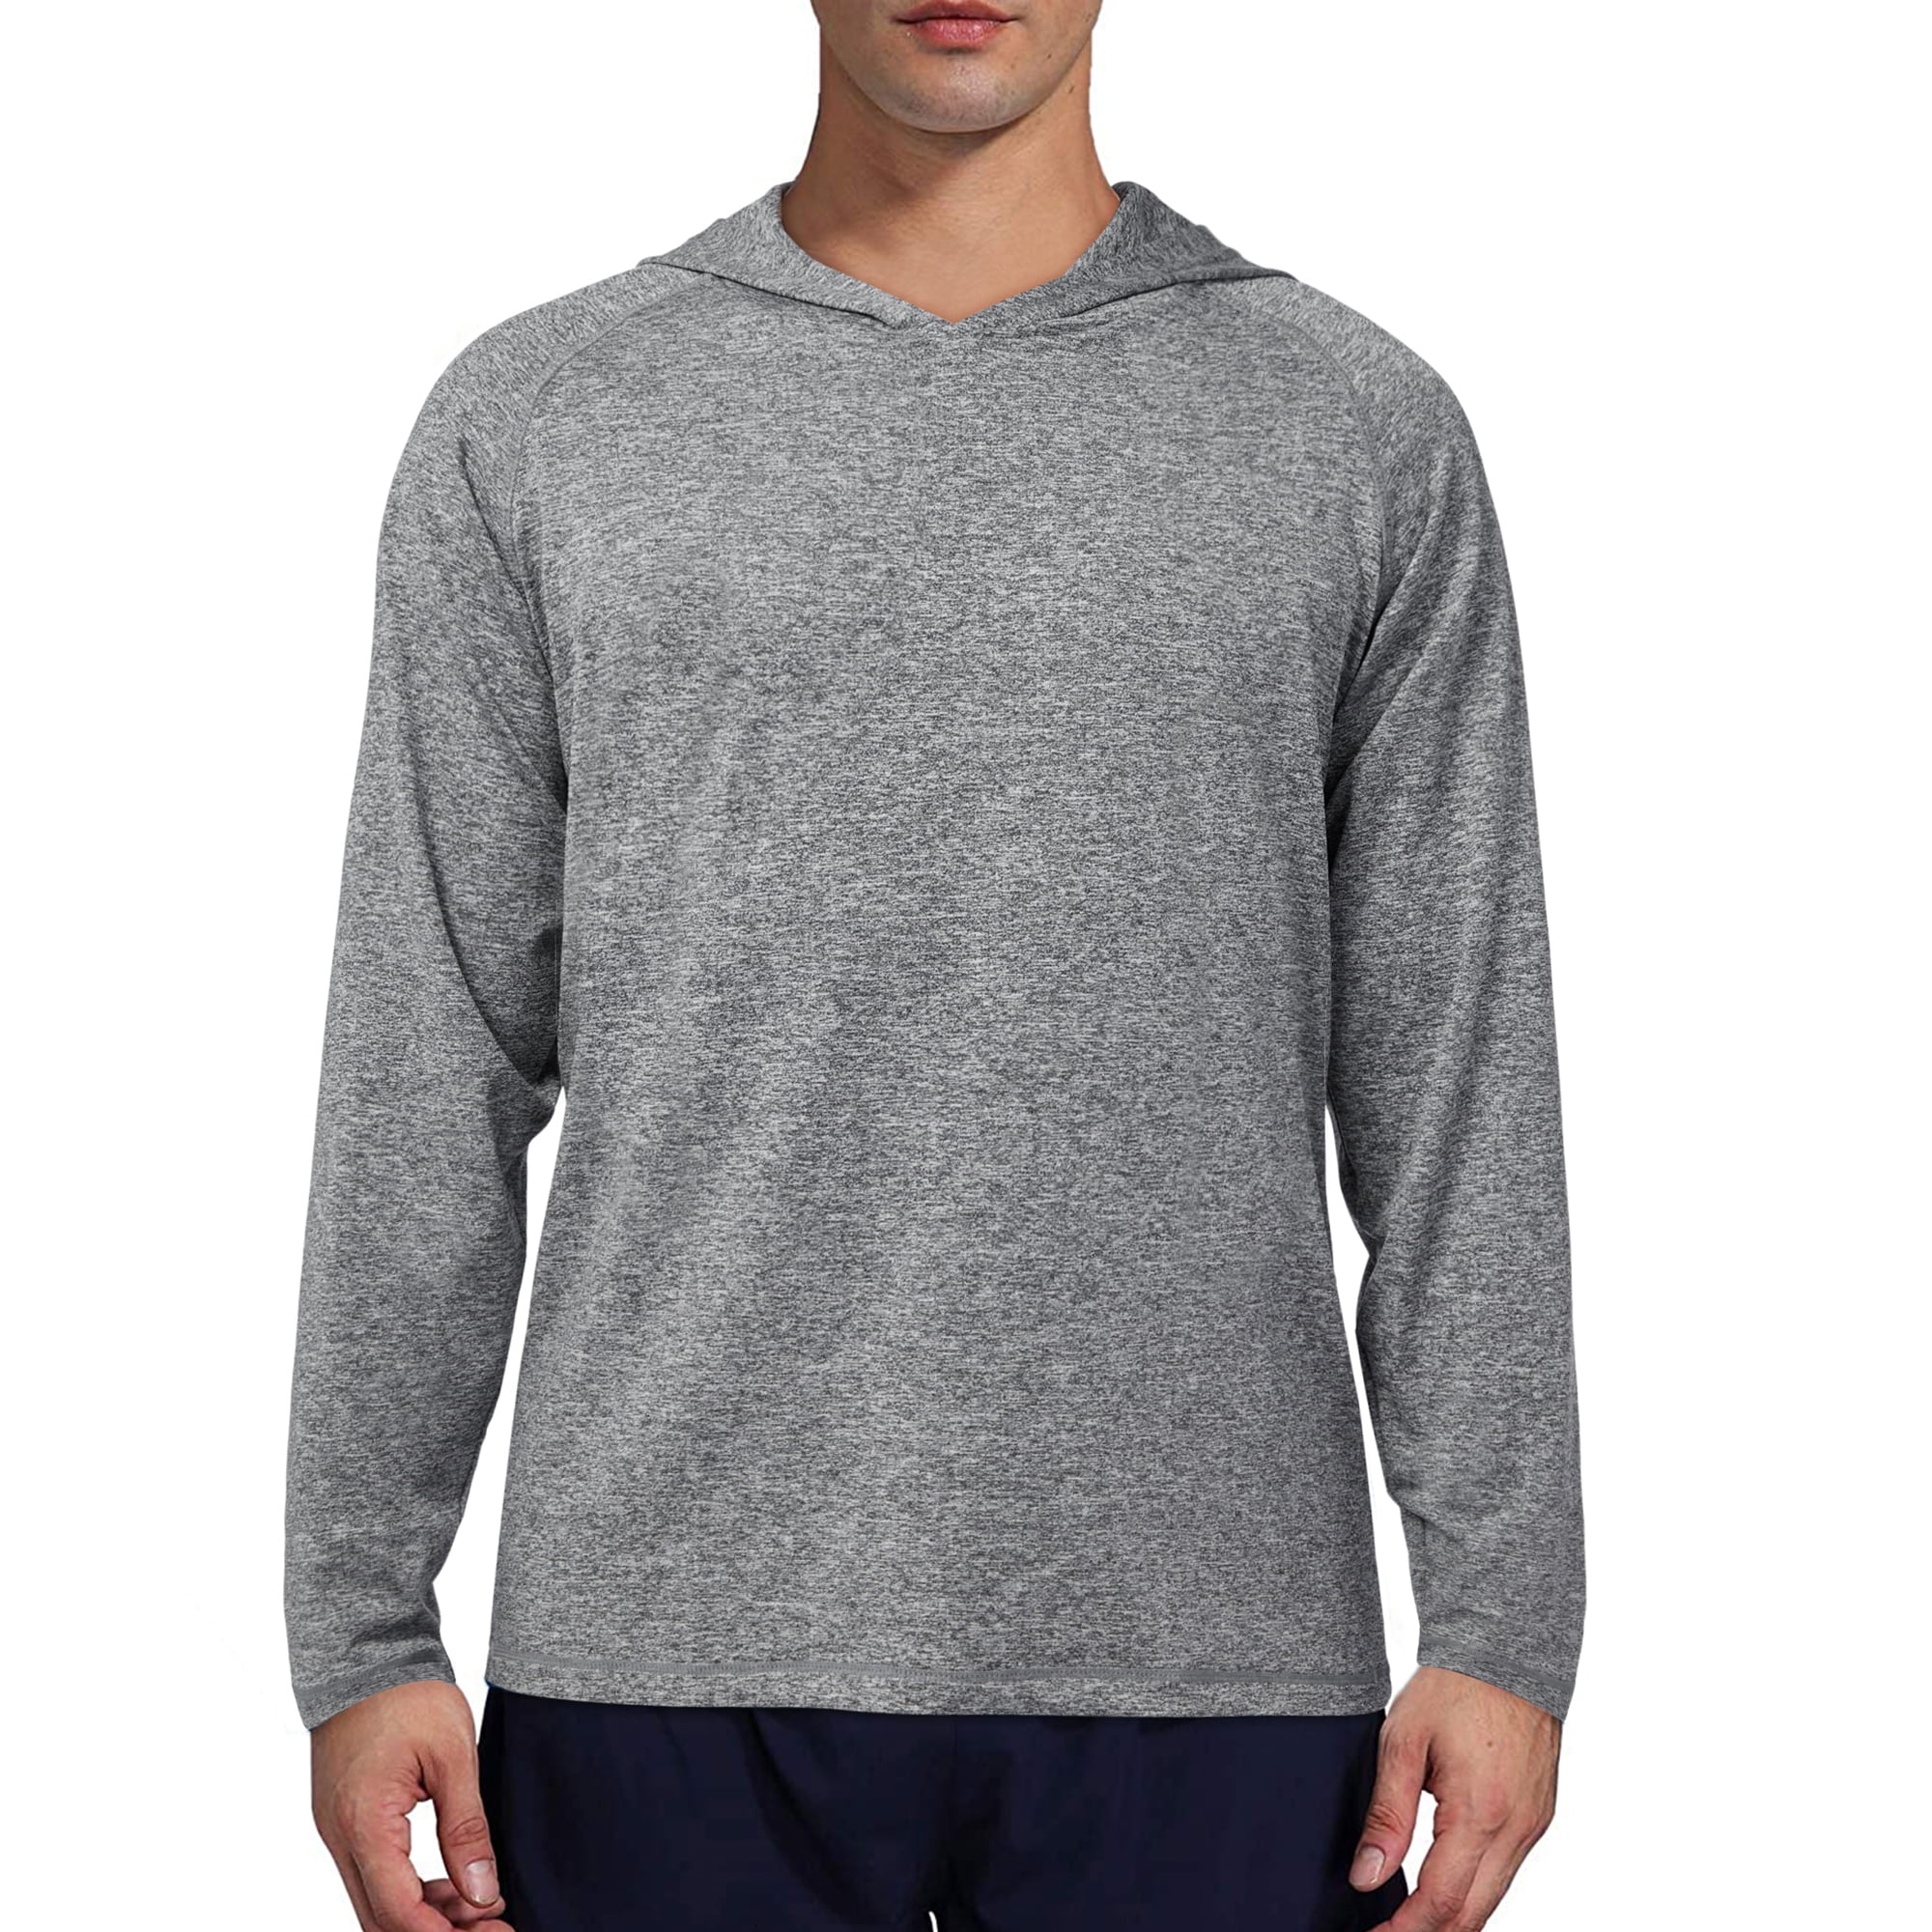 Men's Hoodie Long Sleeve Quick Dry Lightweight Fishing Workout Running  Hooded Sweatshirts, Gray, 3XL 